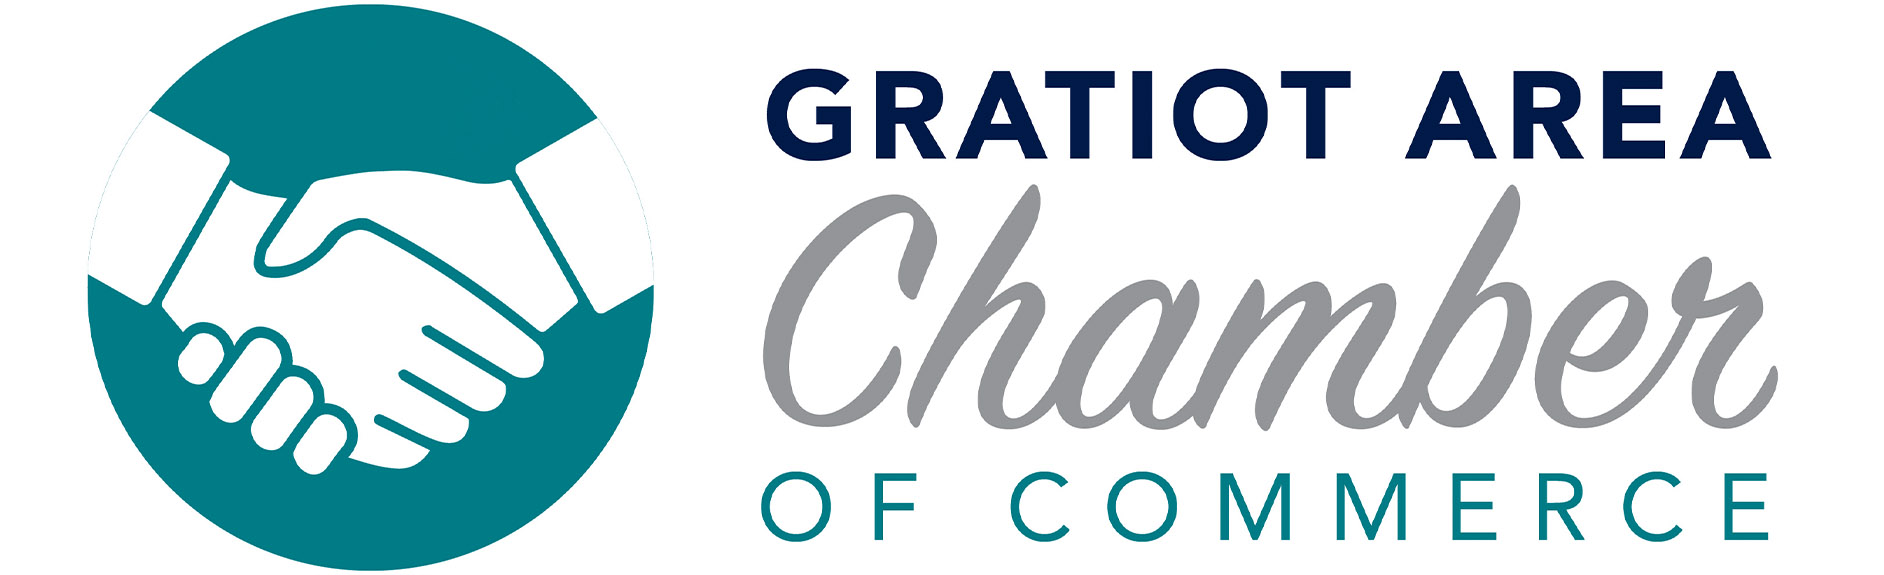 Gratiot Area Chamber of Commerce